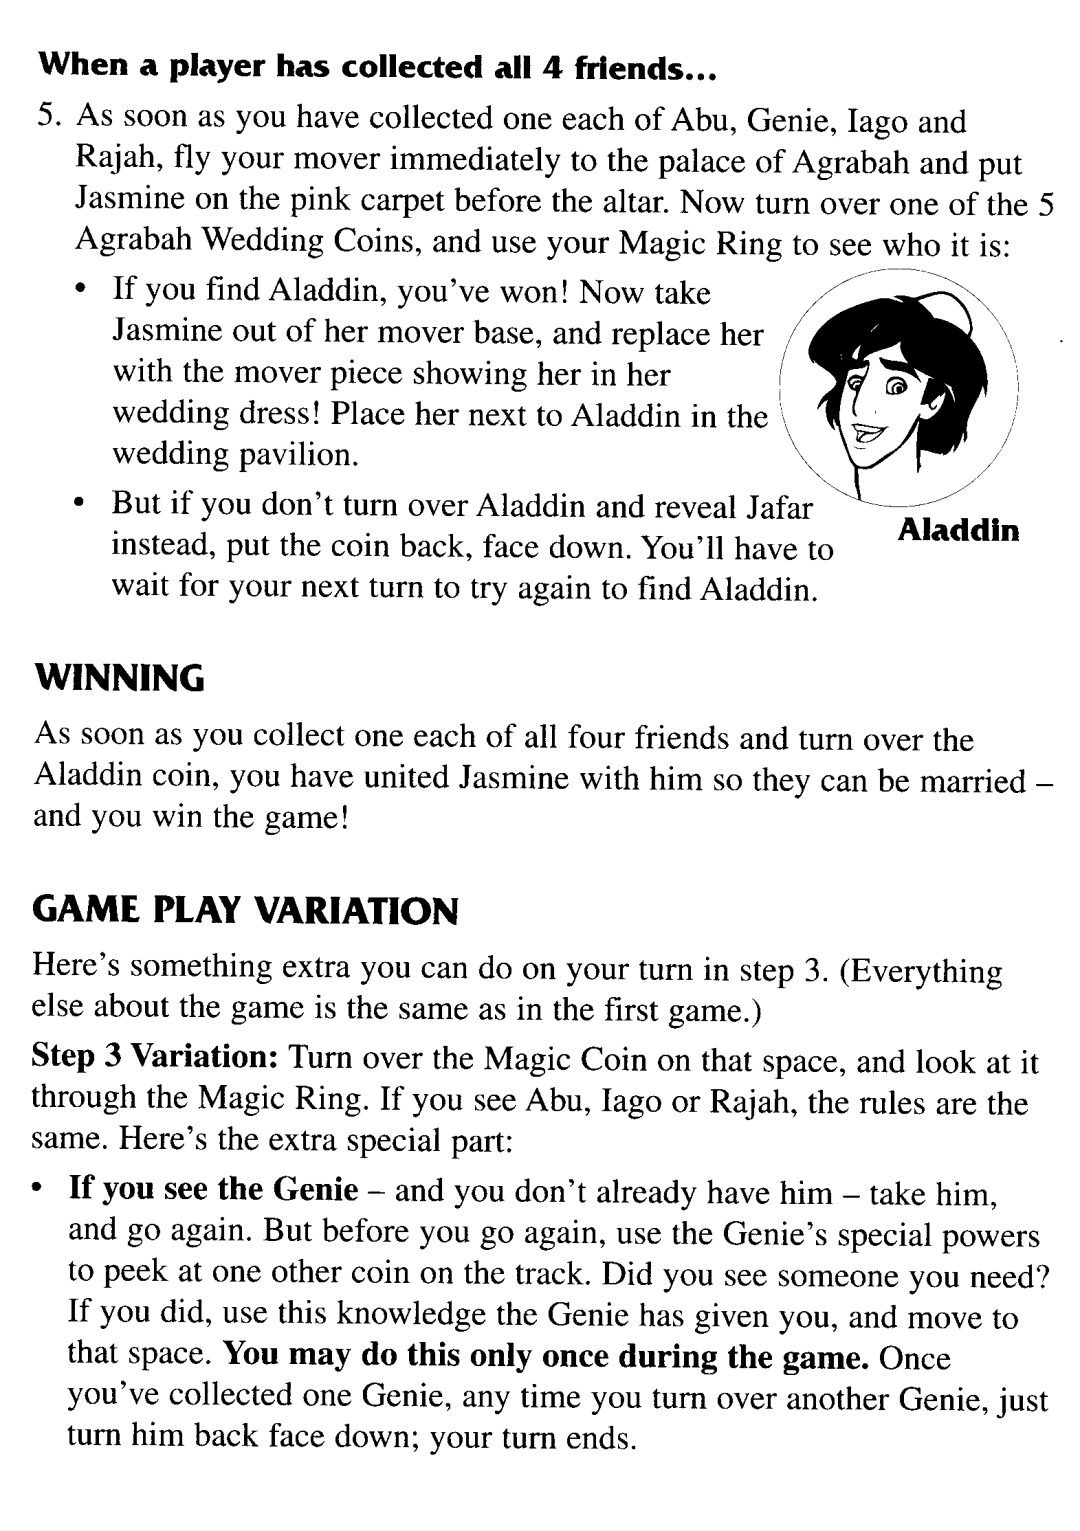 Disney Interactive Studios Aladdin Jasmine Magic Ring Game manual 